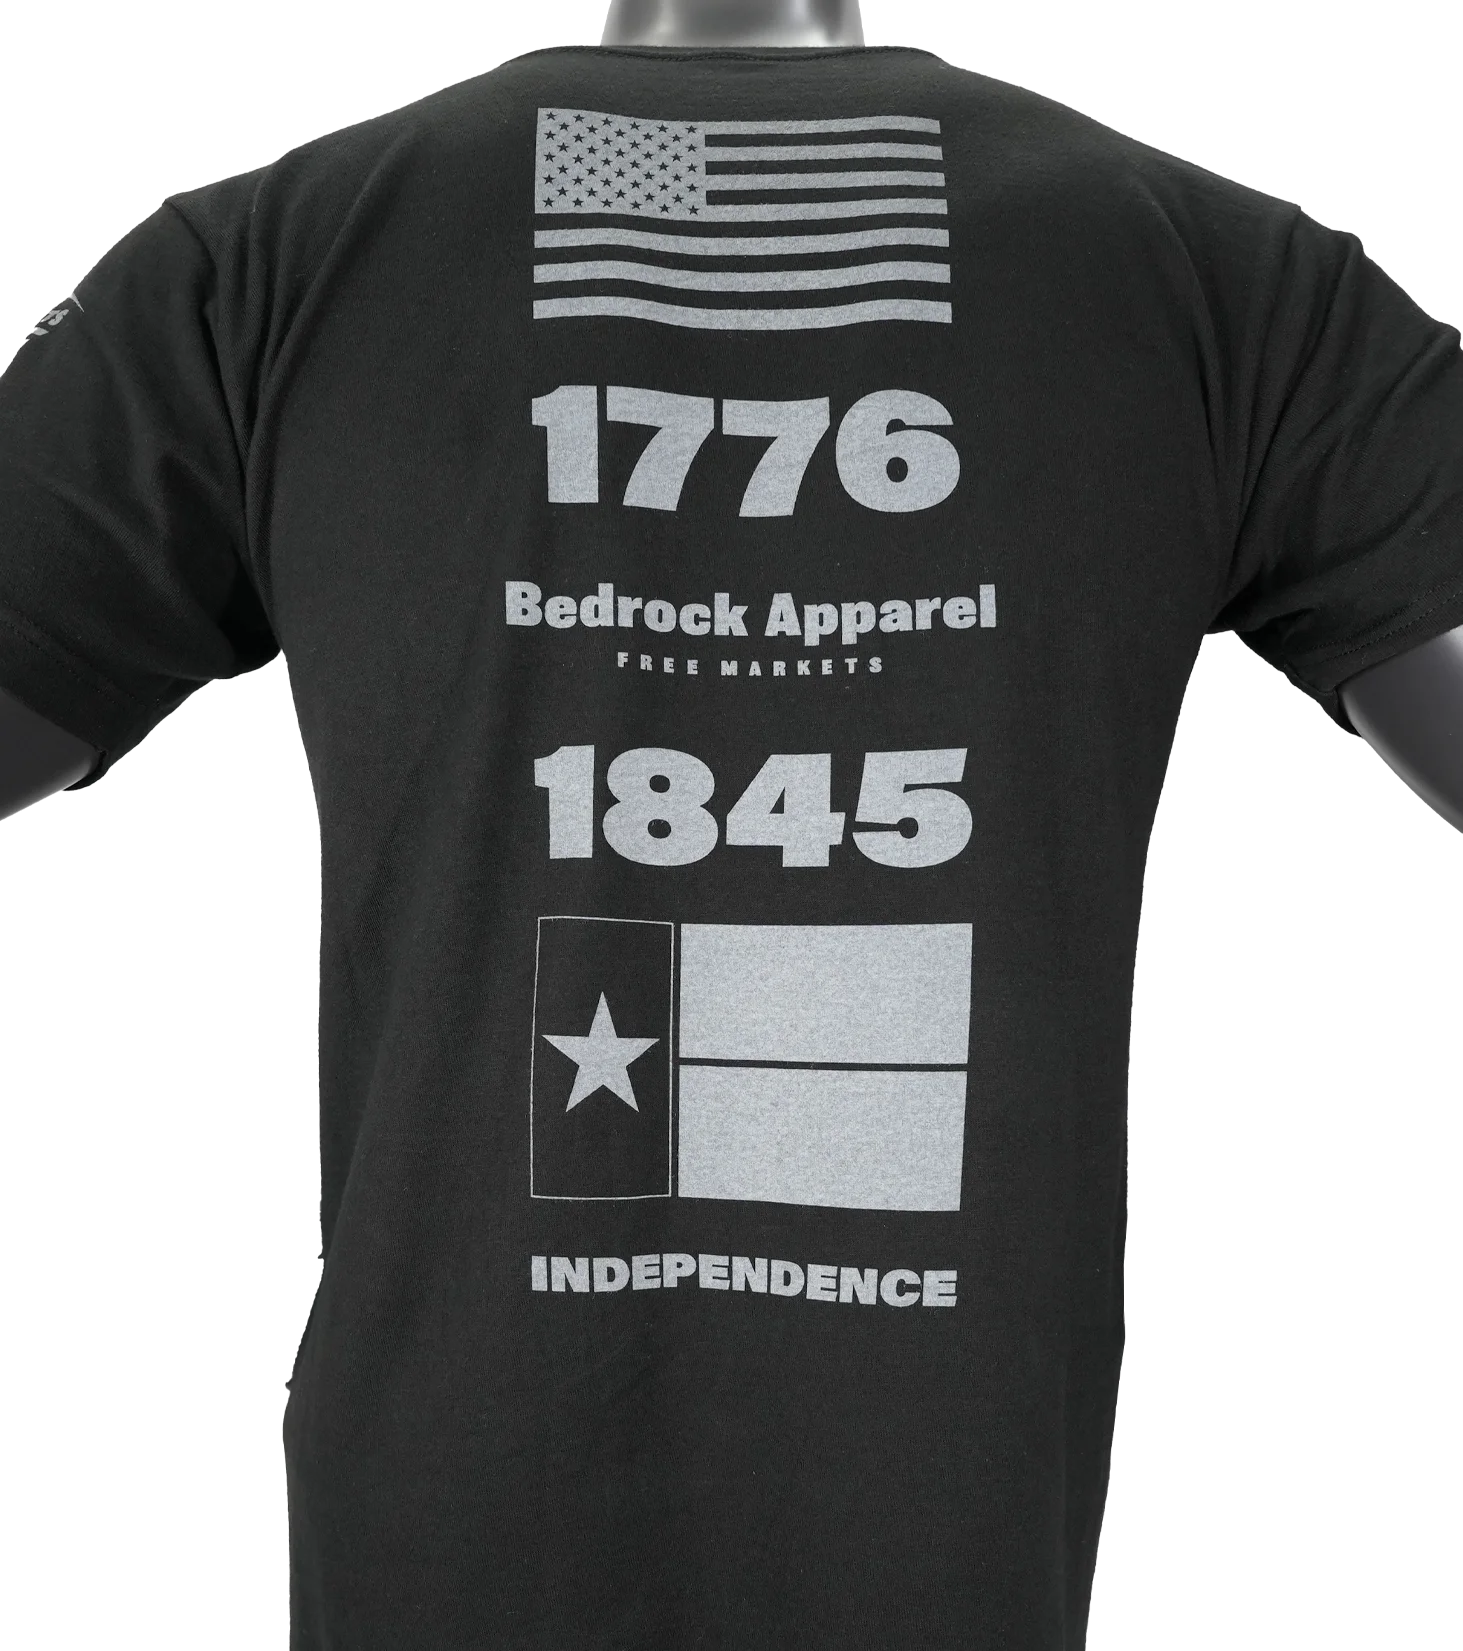 Free-Markets-1776-1845-t-shirt-back-black.webp